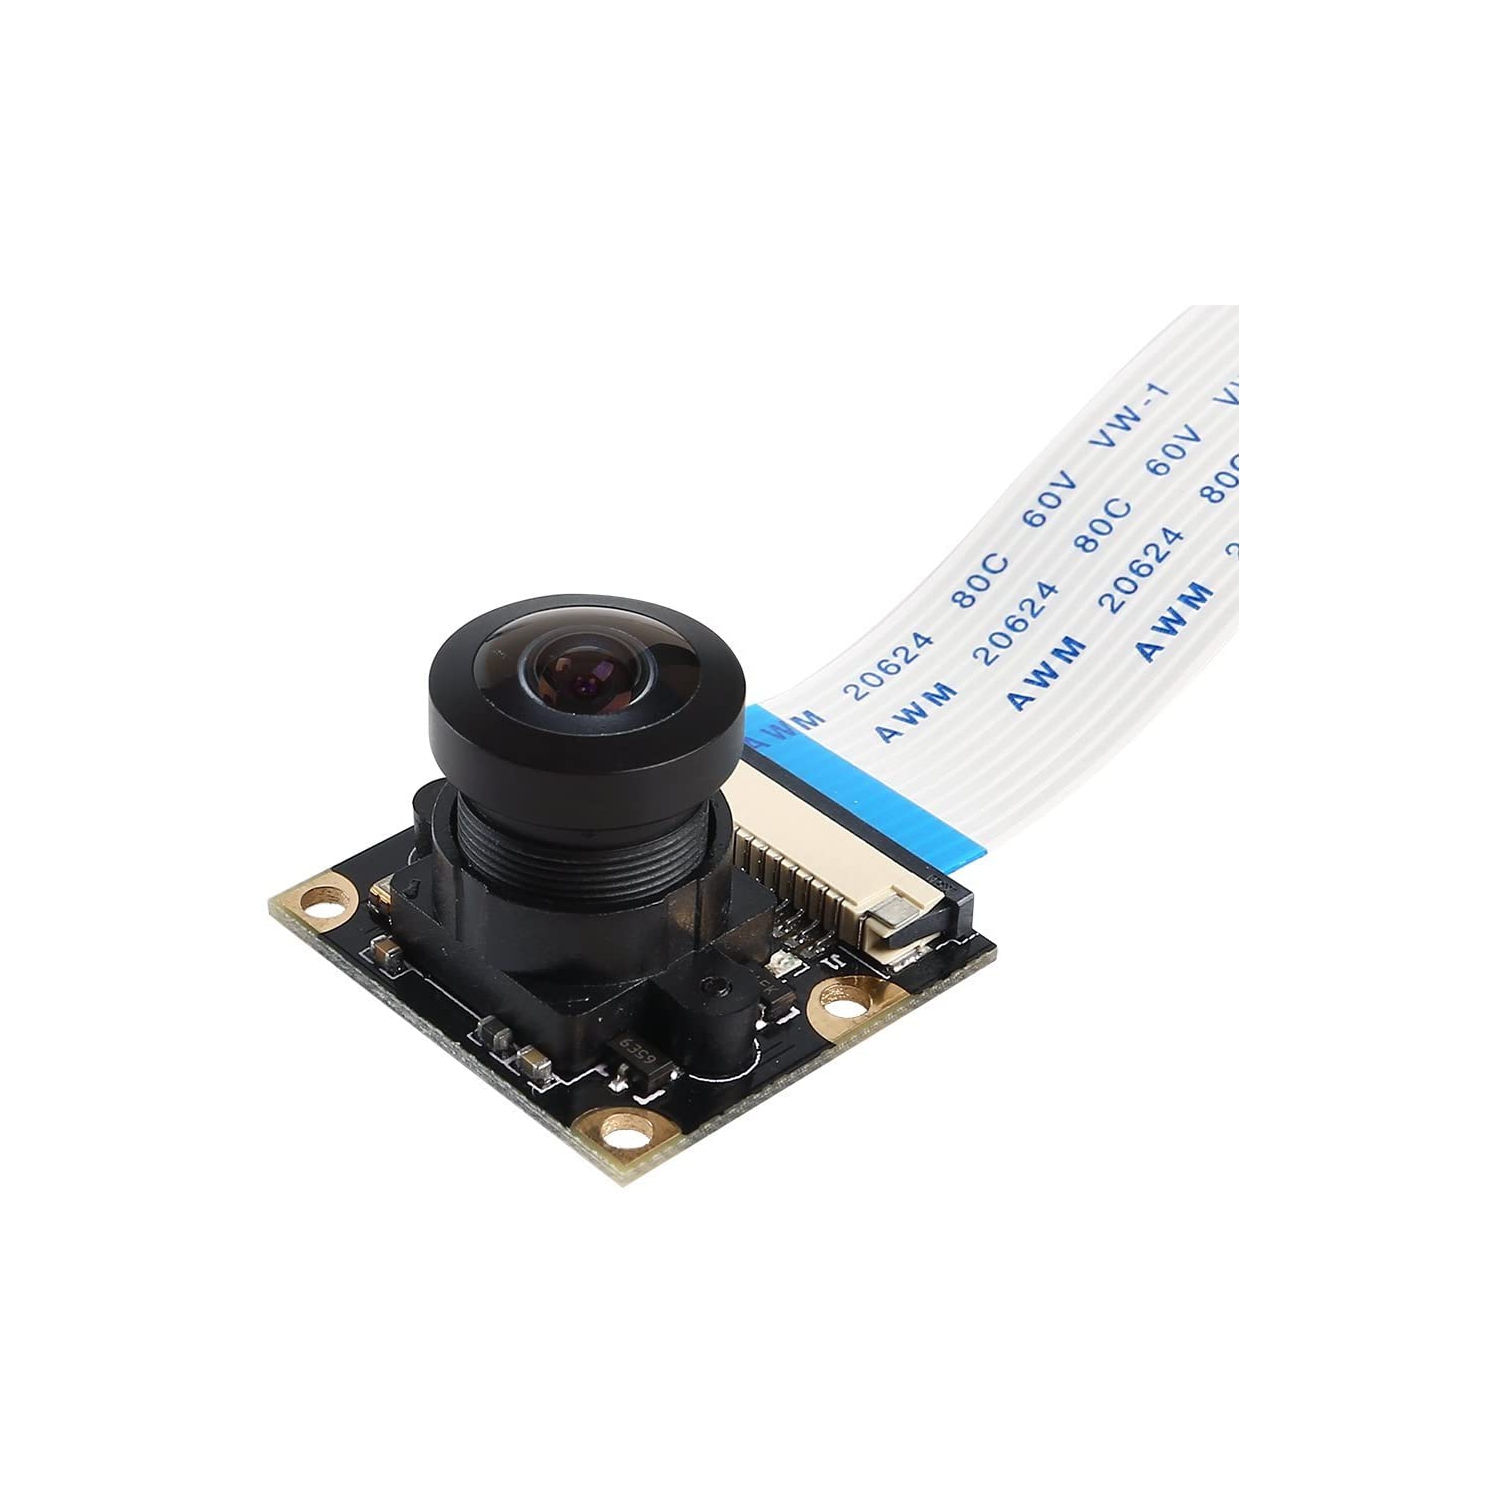 SainSmart Wide Angle Fish-Eye Camera Lenses for Raspberry Pi 3 Model B Pi 2 Model B+ Arduino, RoHS certified